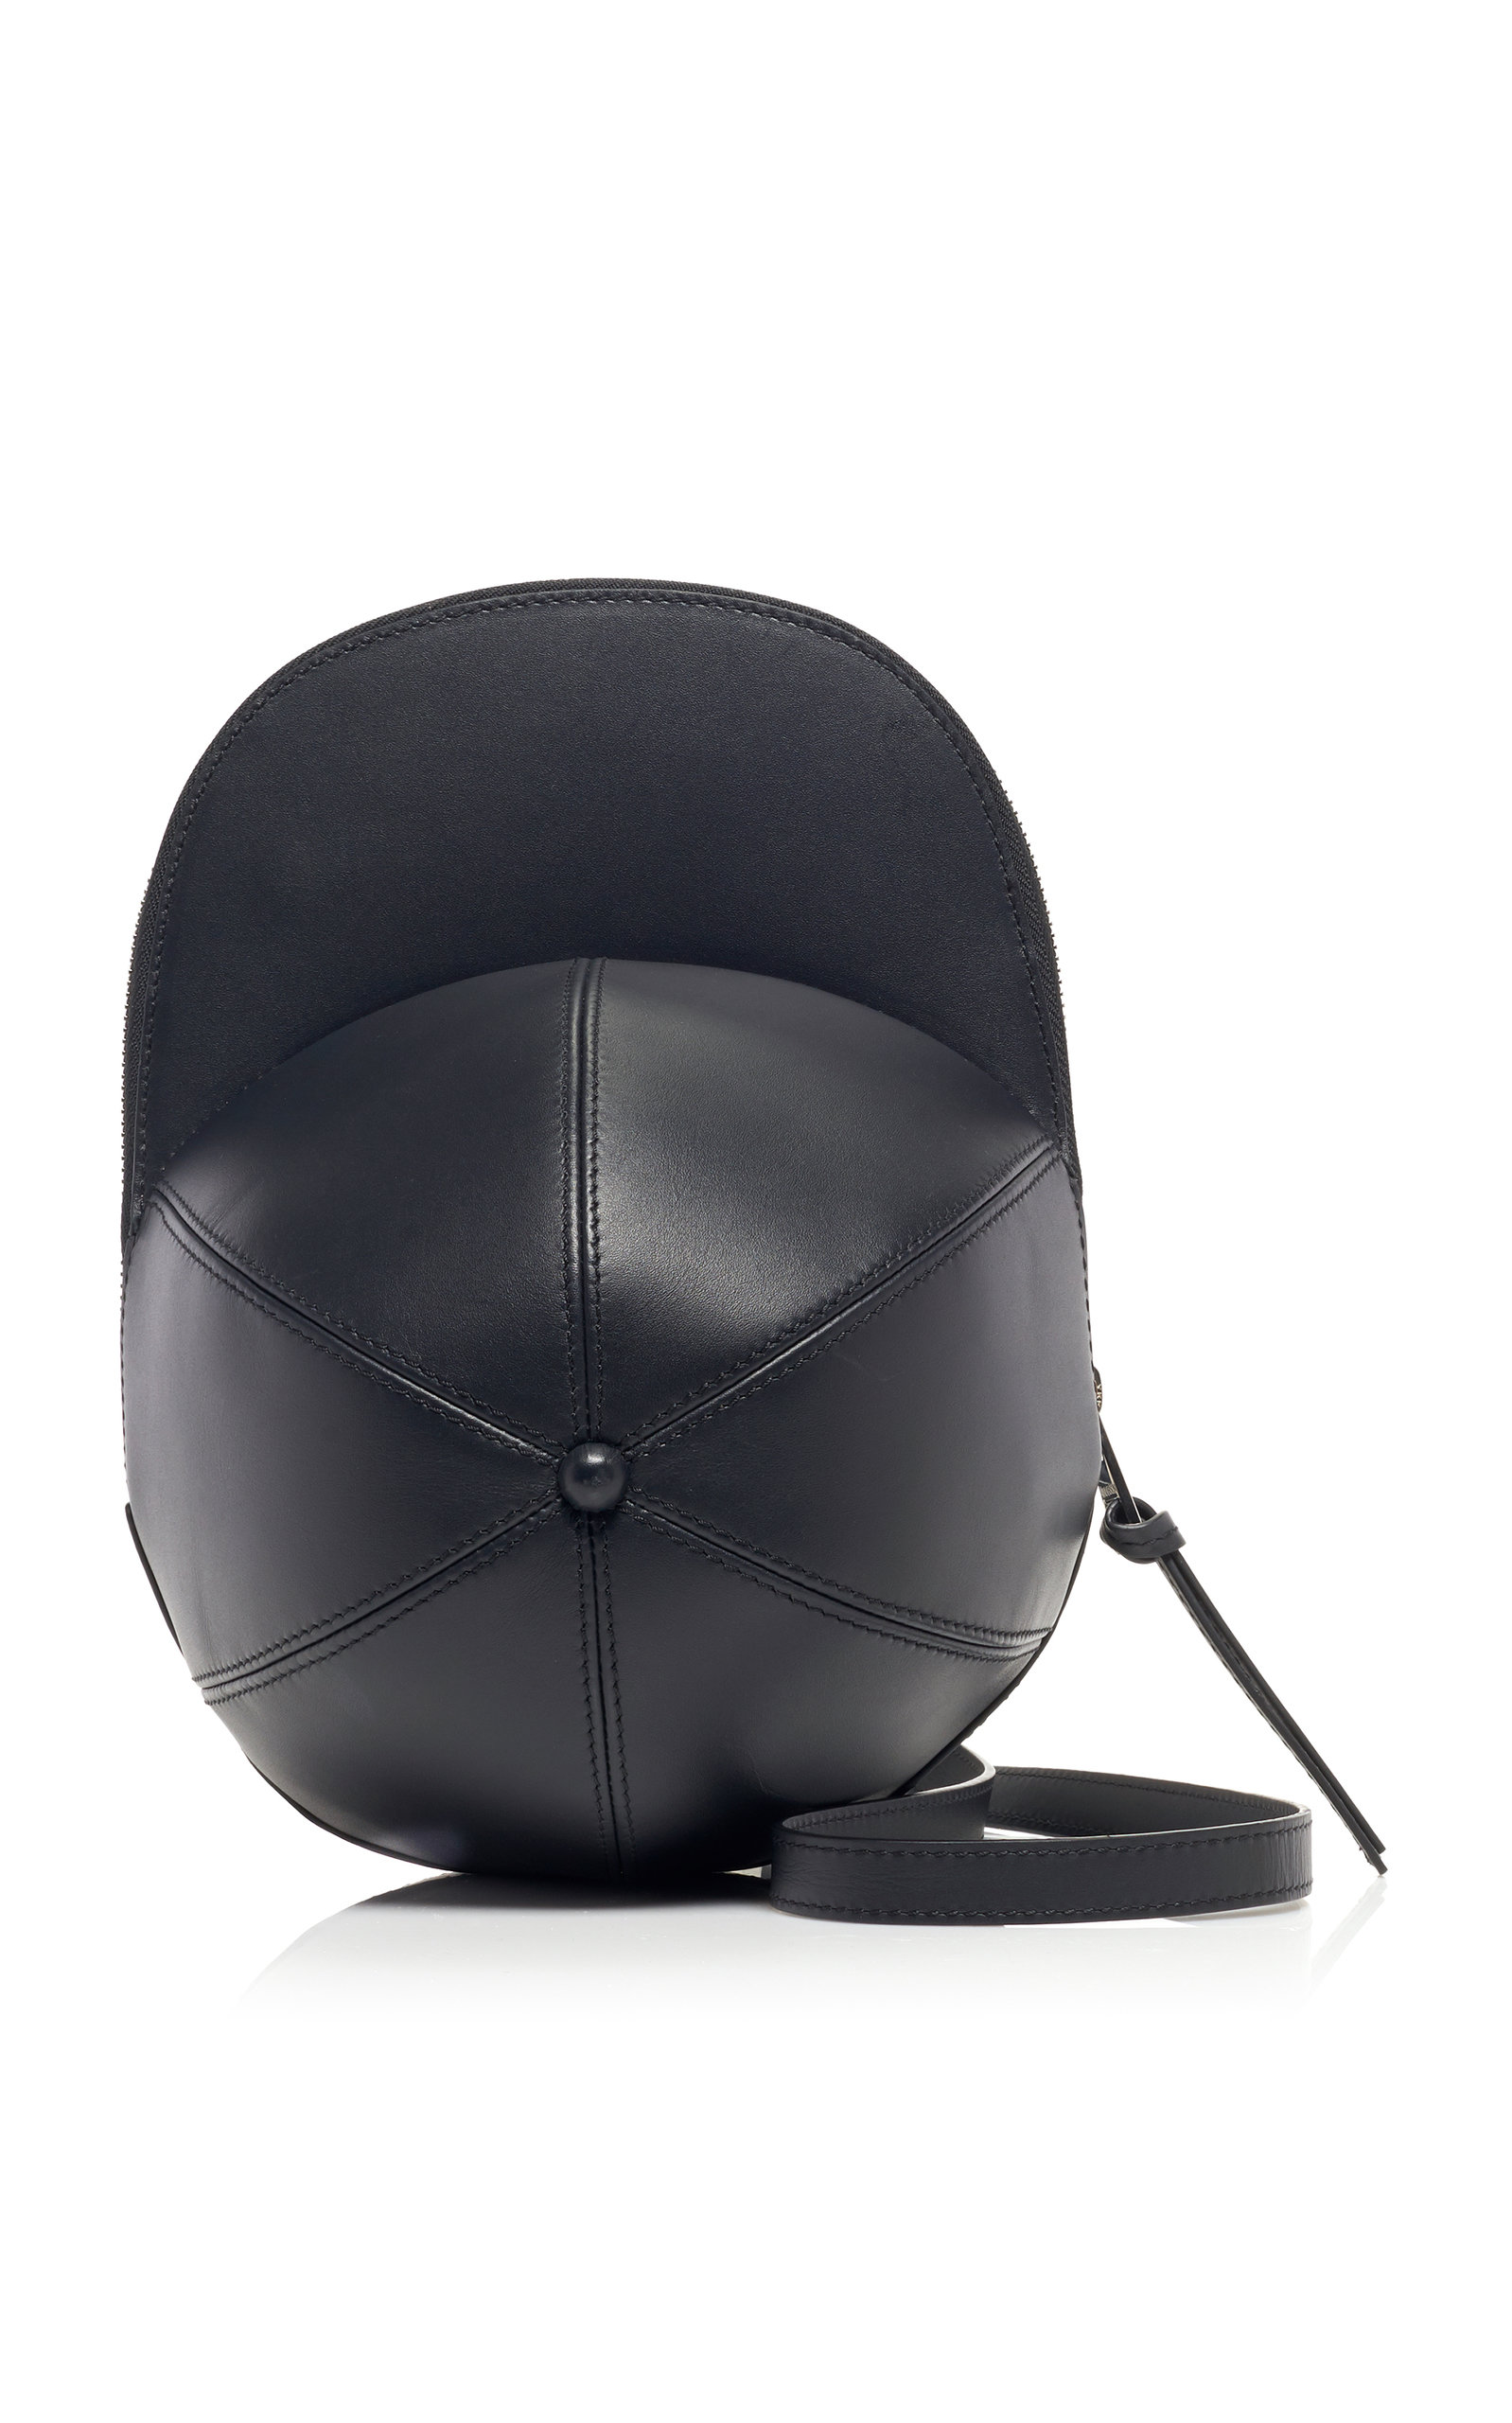 Cap Leather Bag By Jw Anderson Moda Operandi